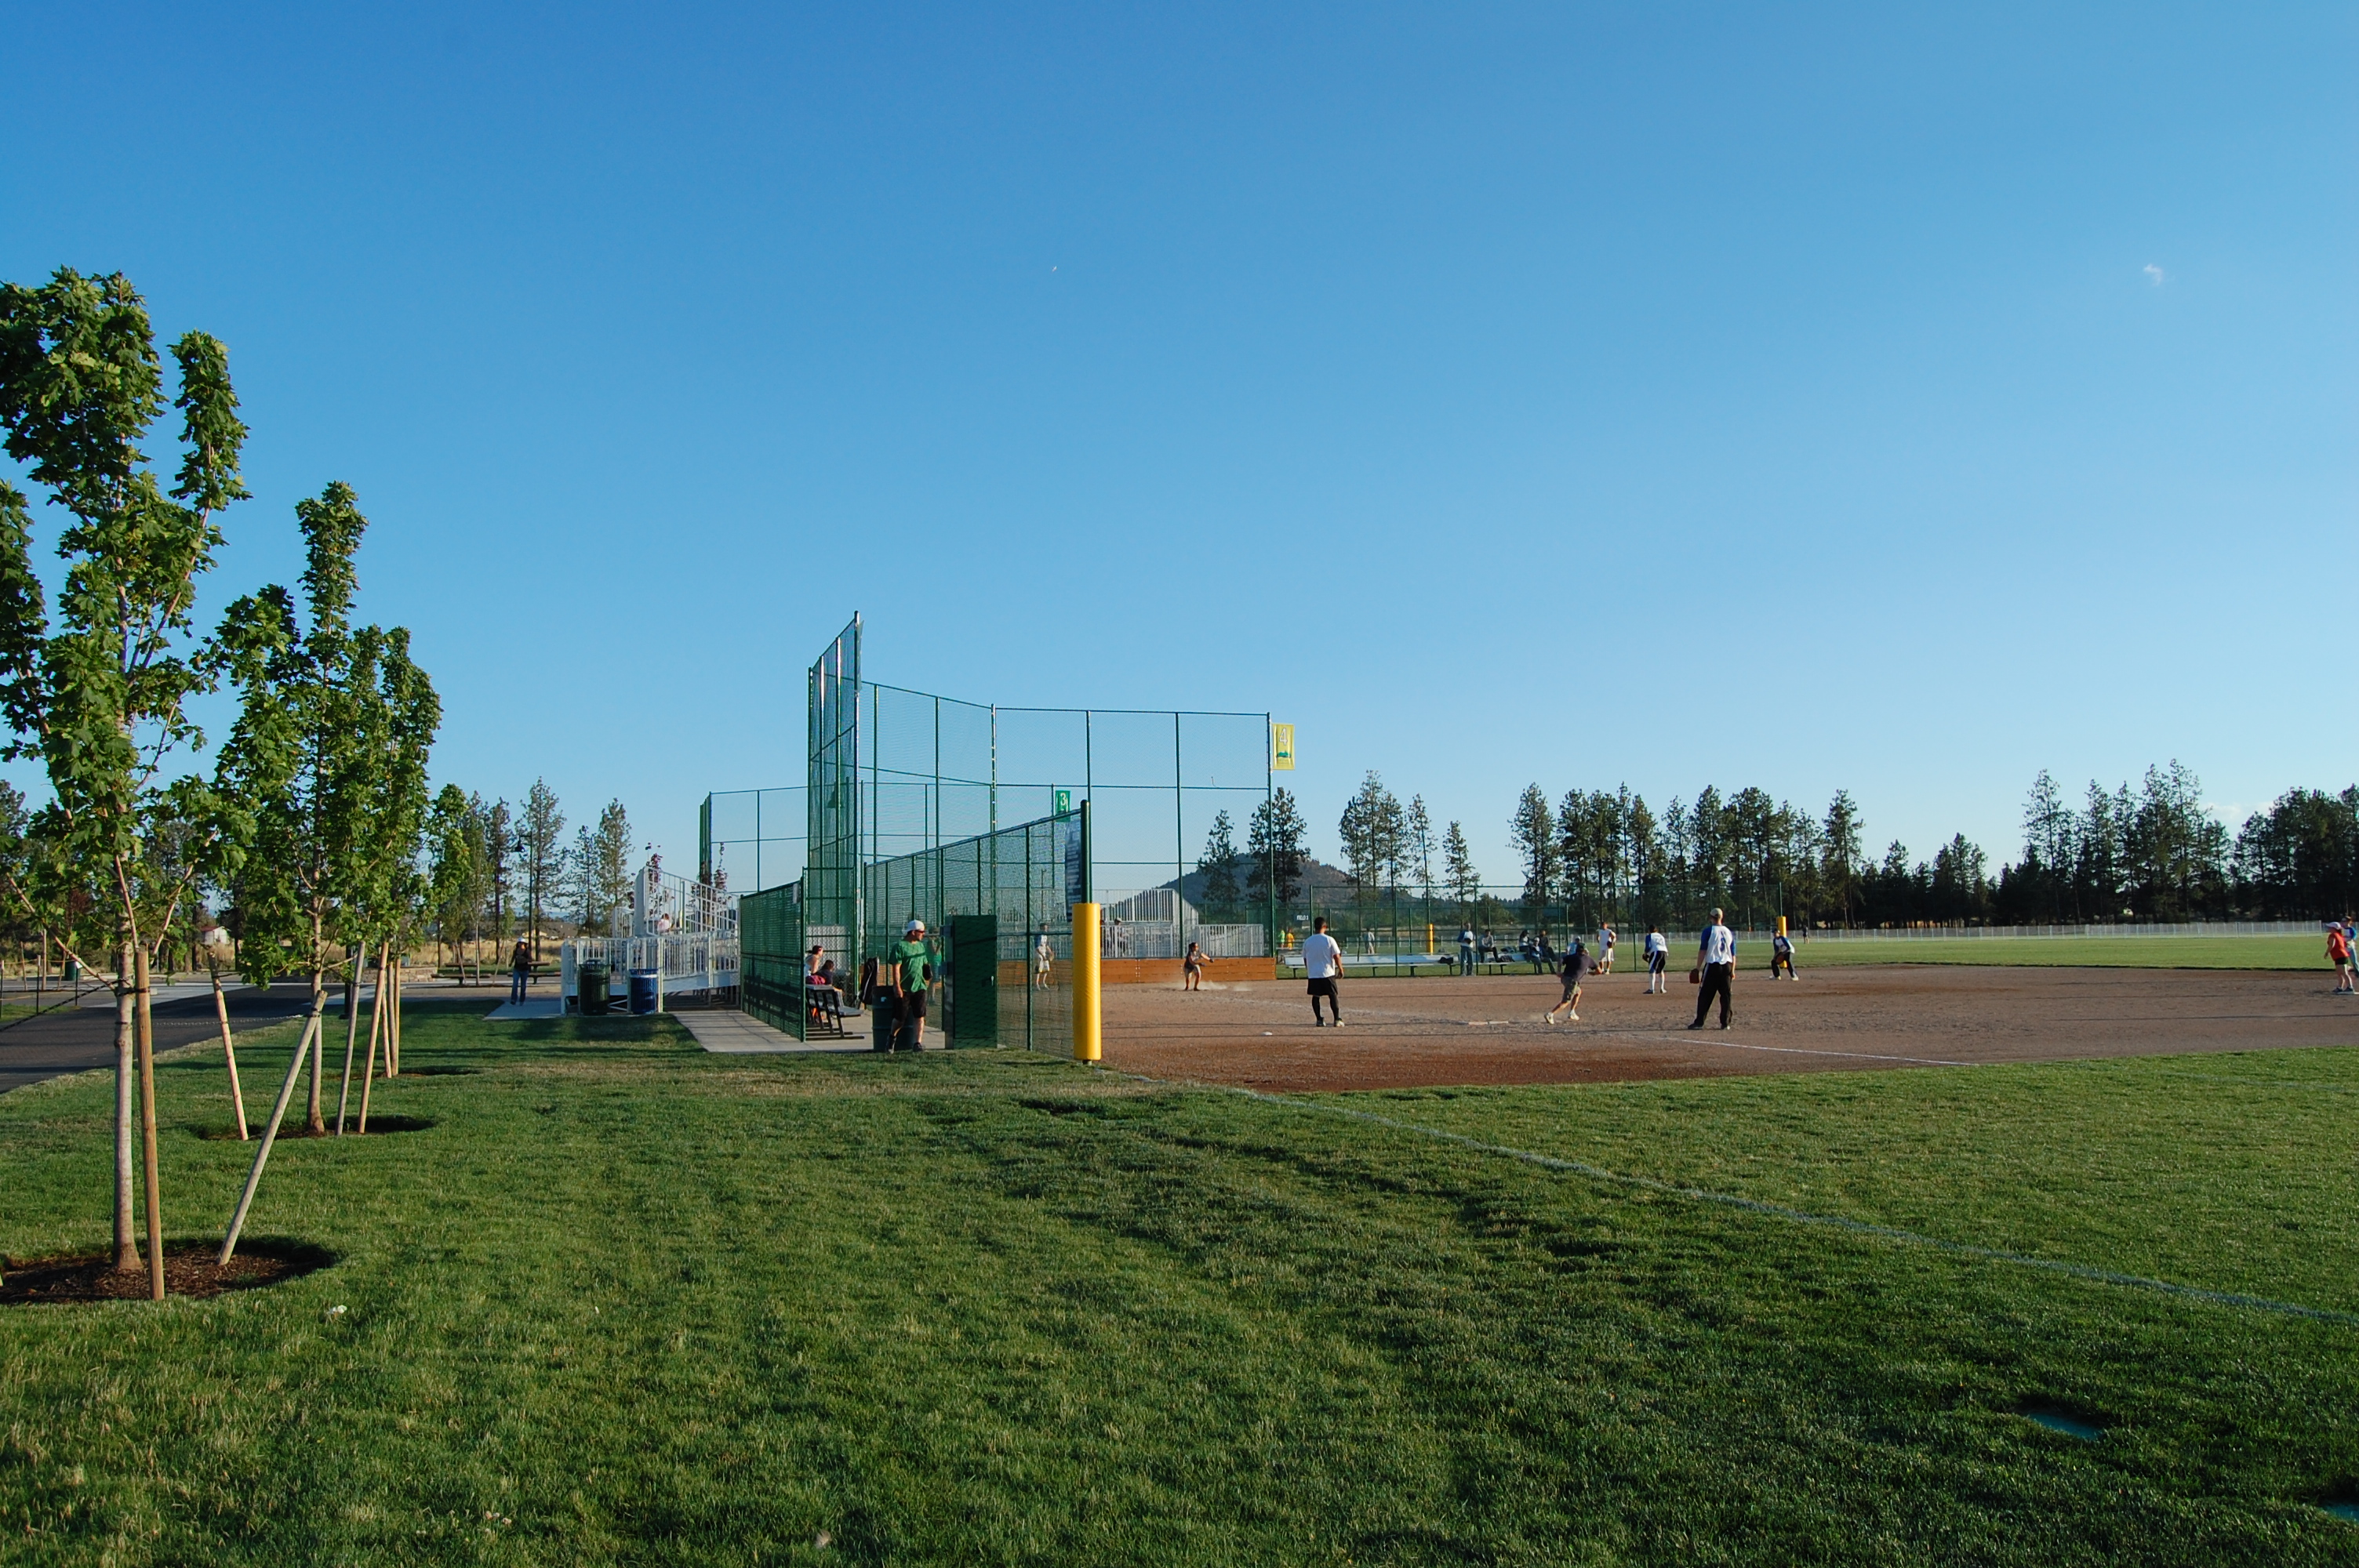 Adult softball game at pine nursery park